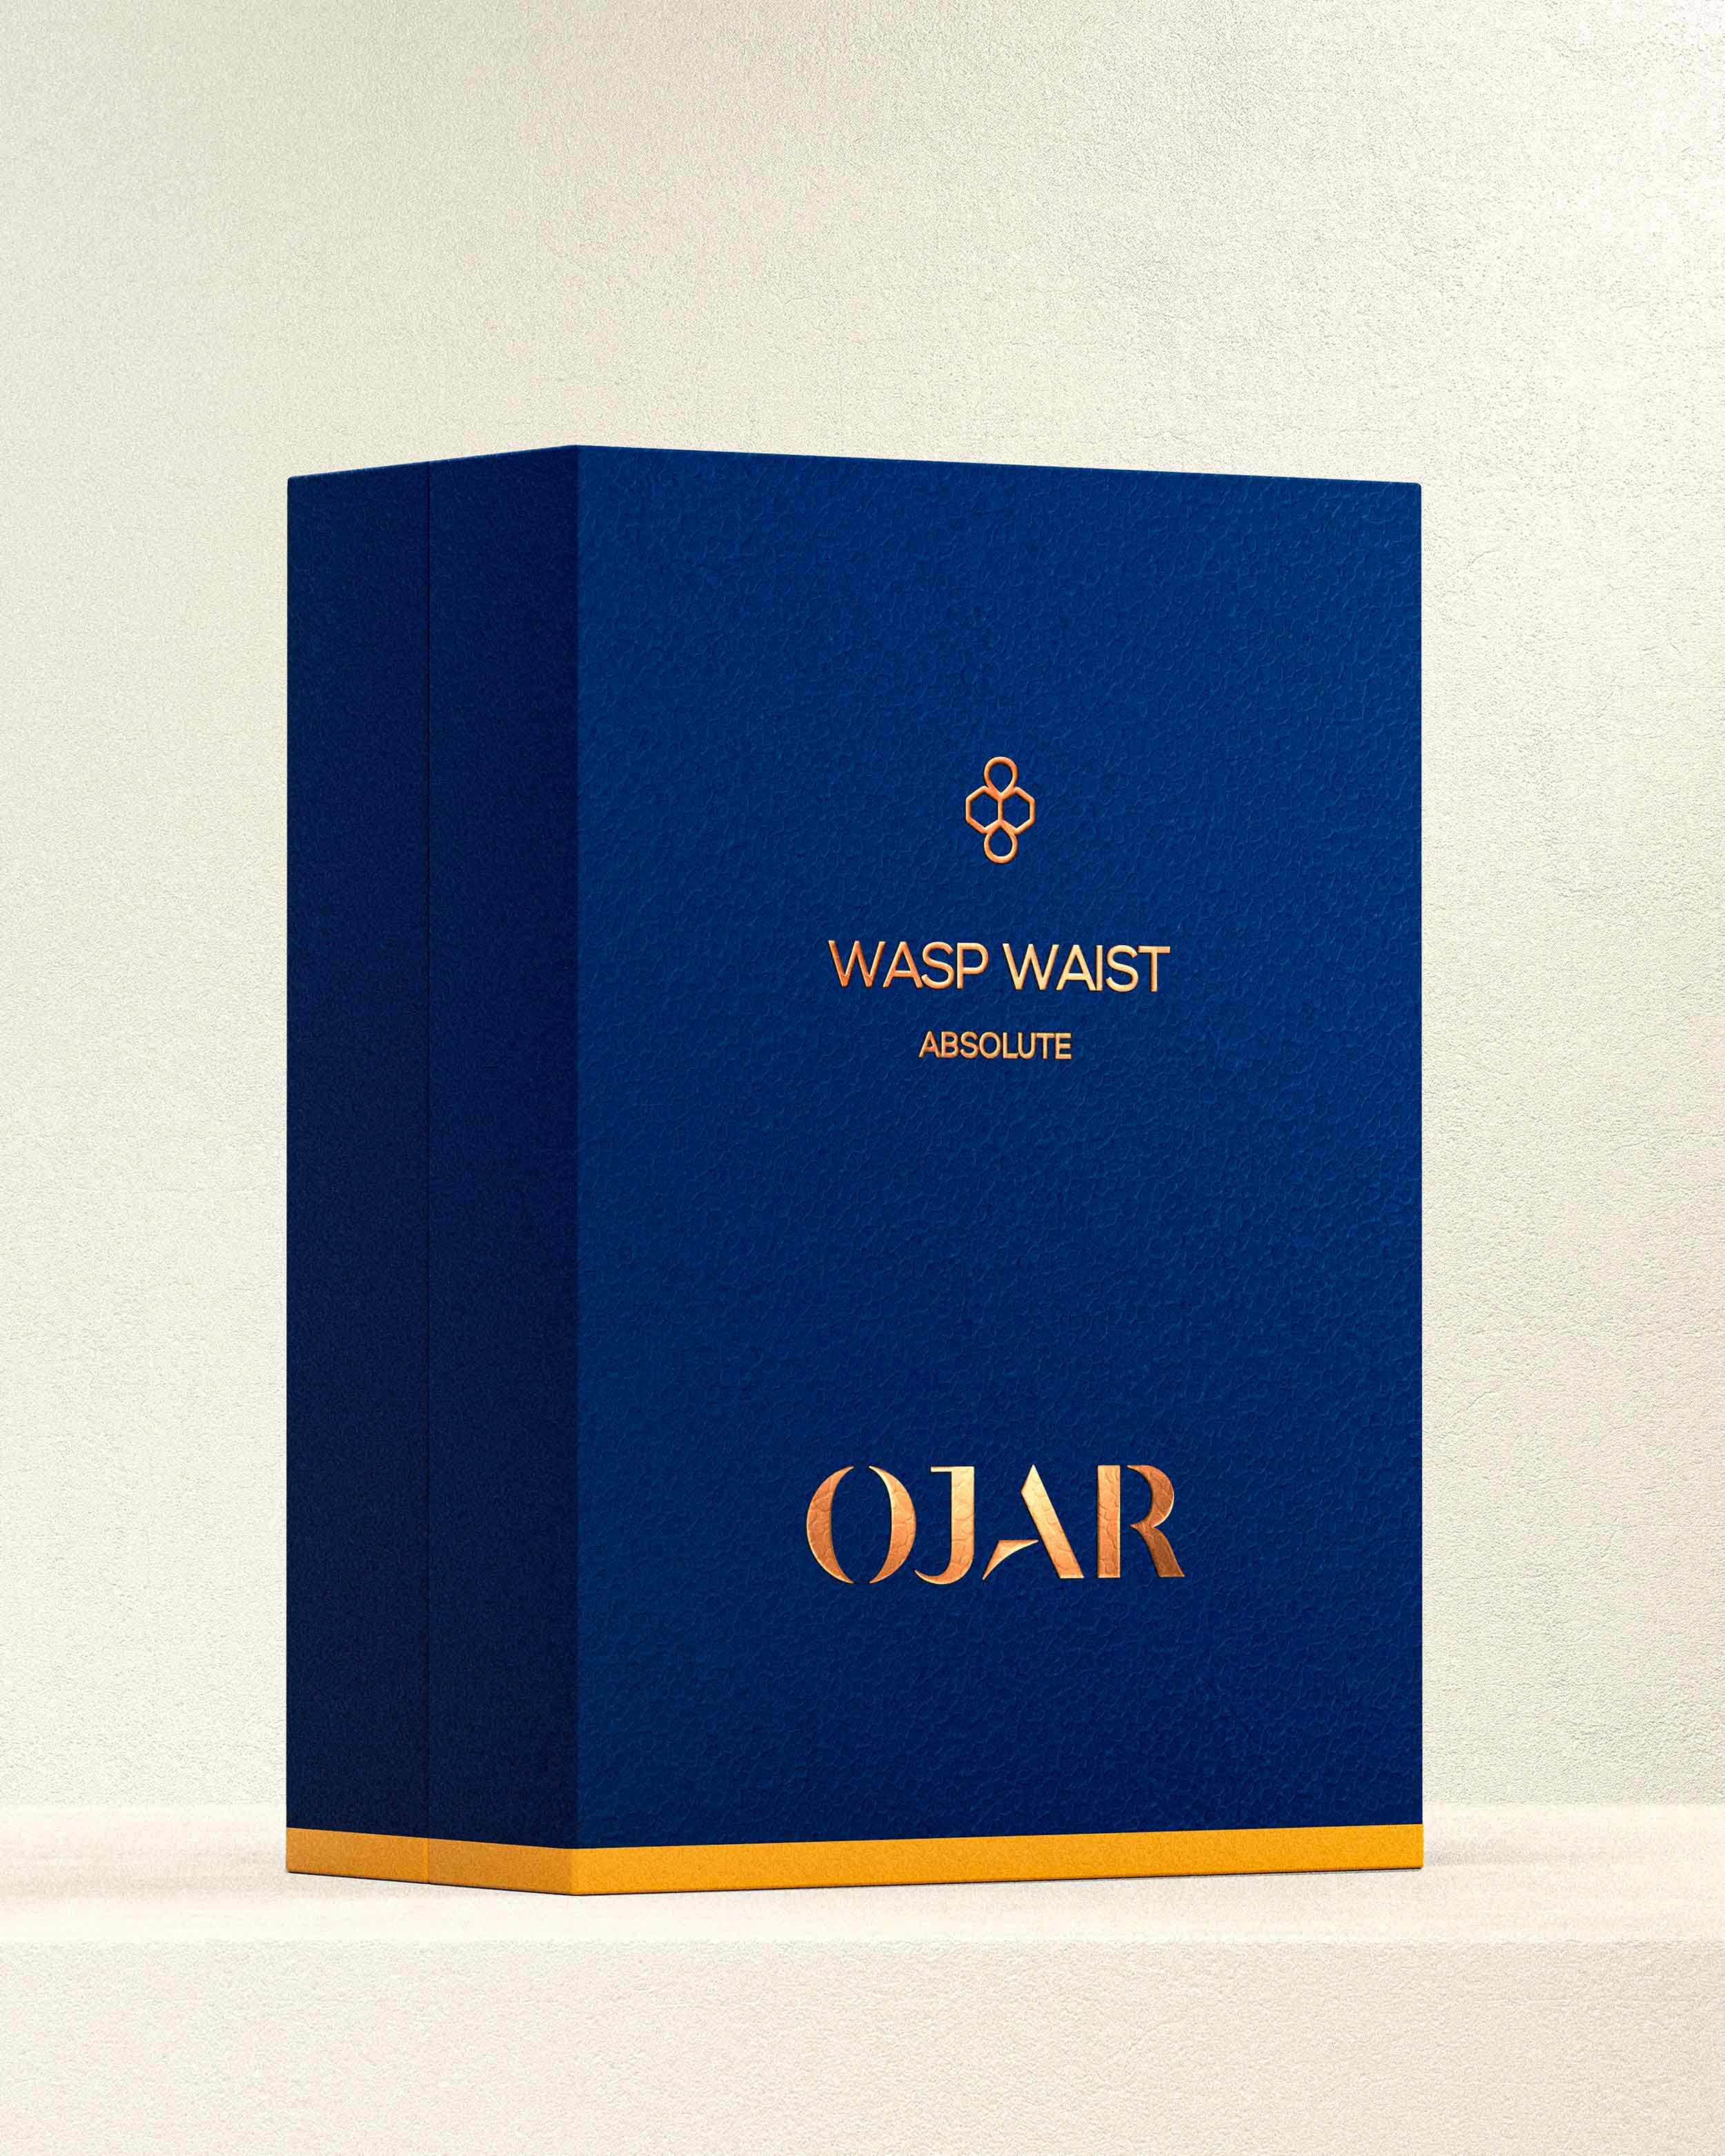 OJAR Absolute Wasp Waist Perfume Pack